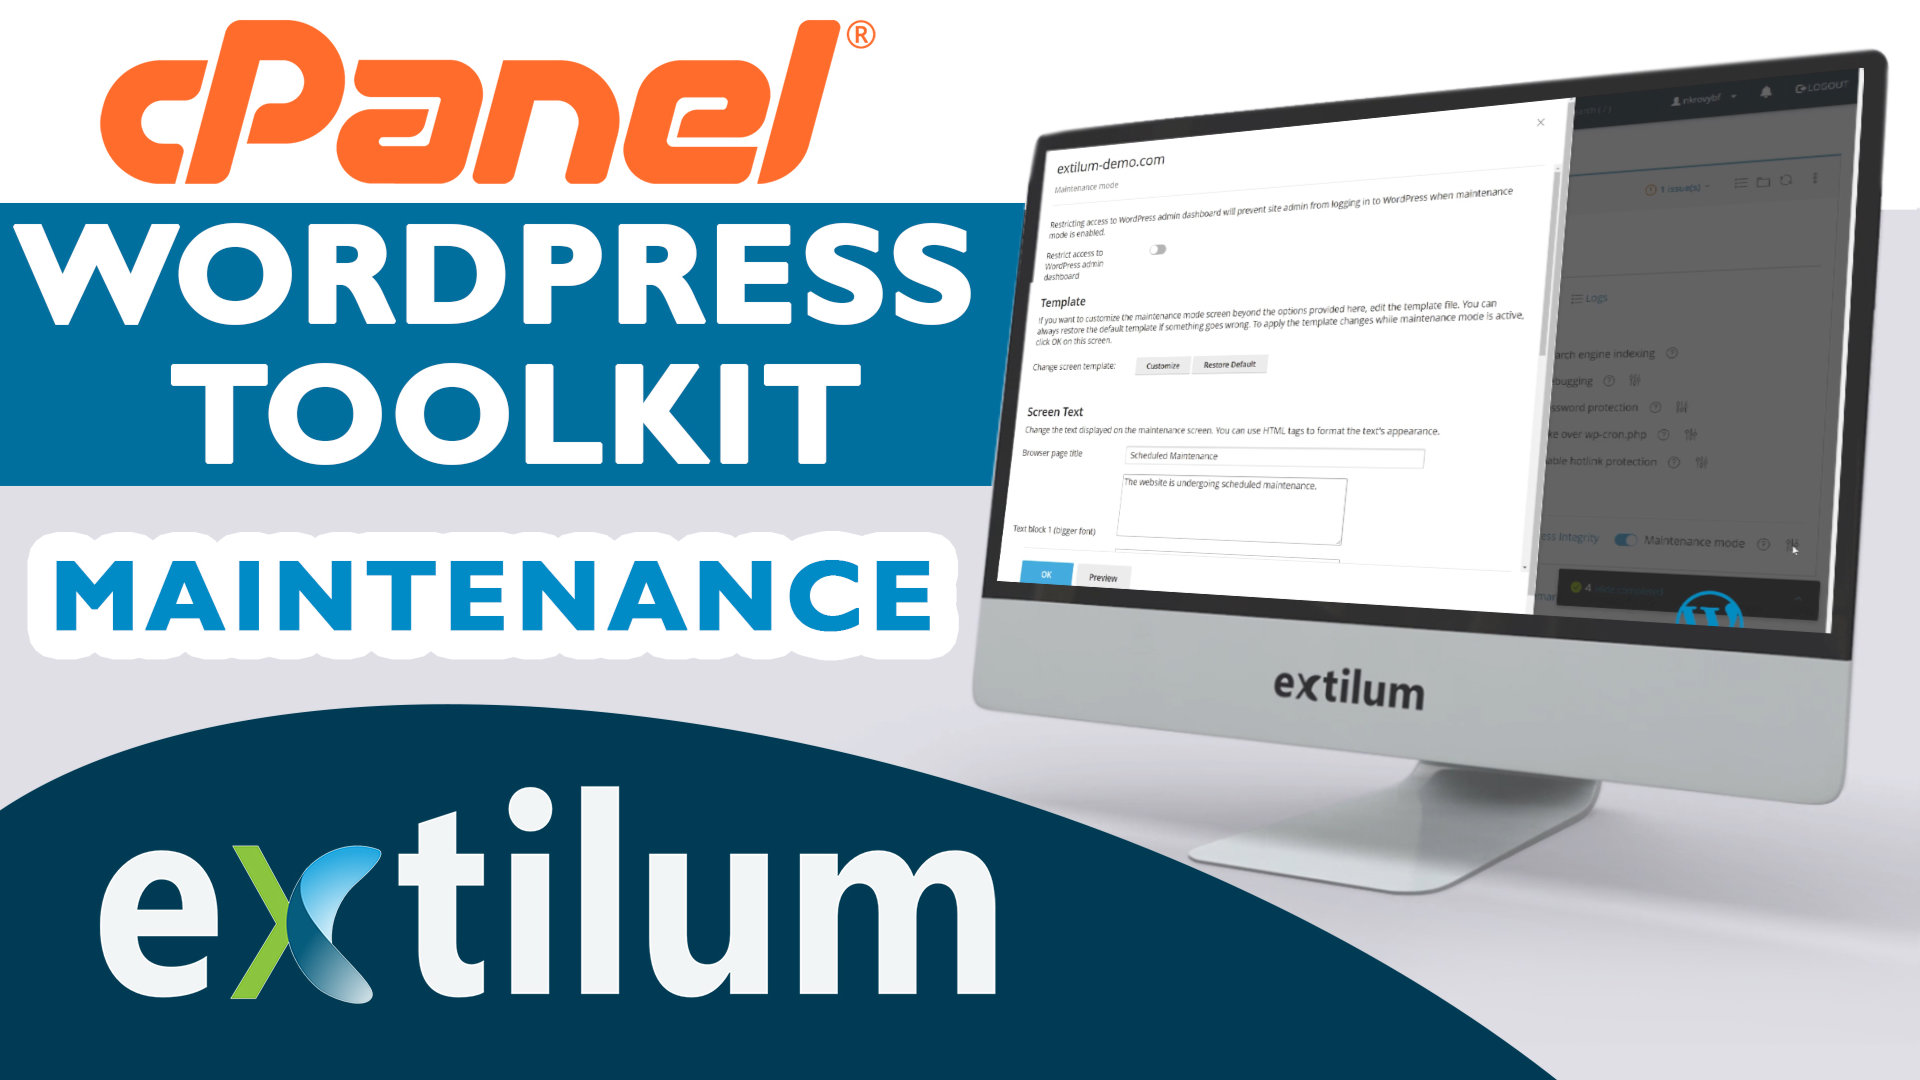 Extilum cpanel - wordpress toolkit - maintenance